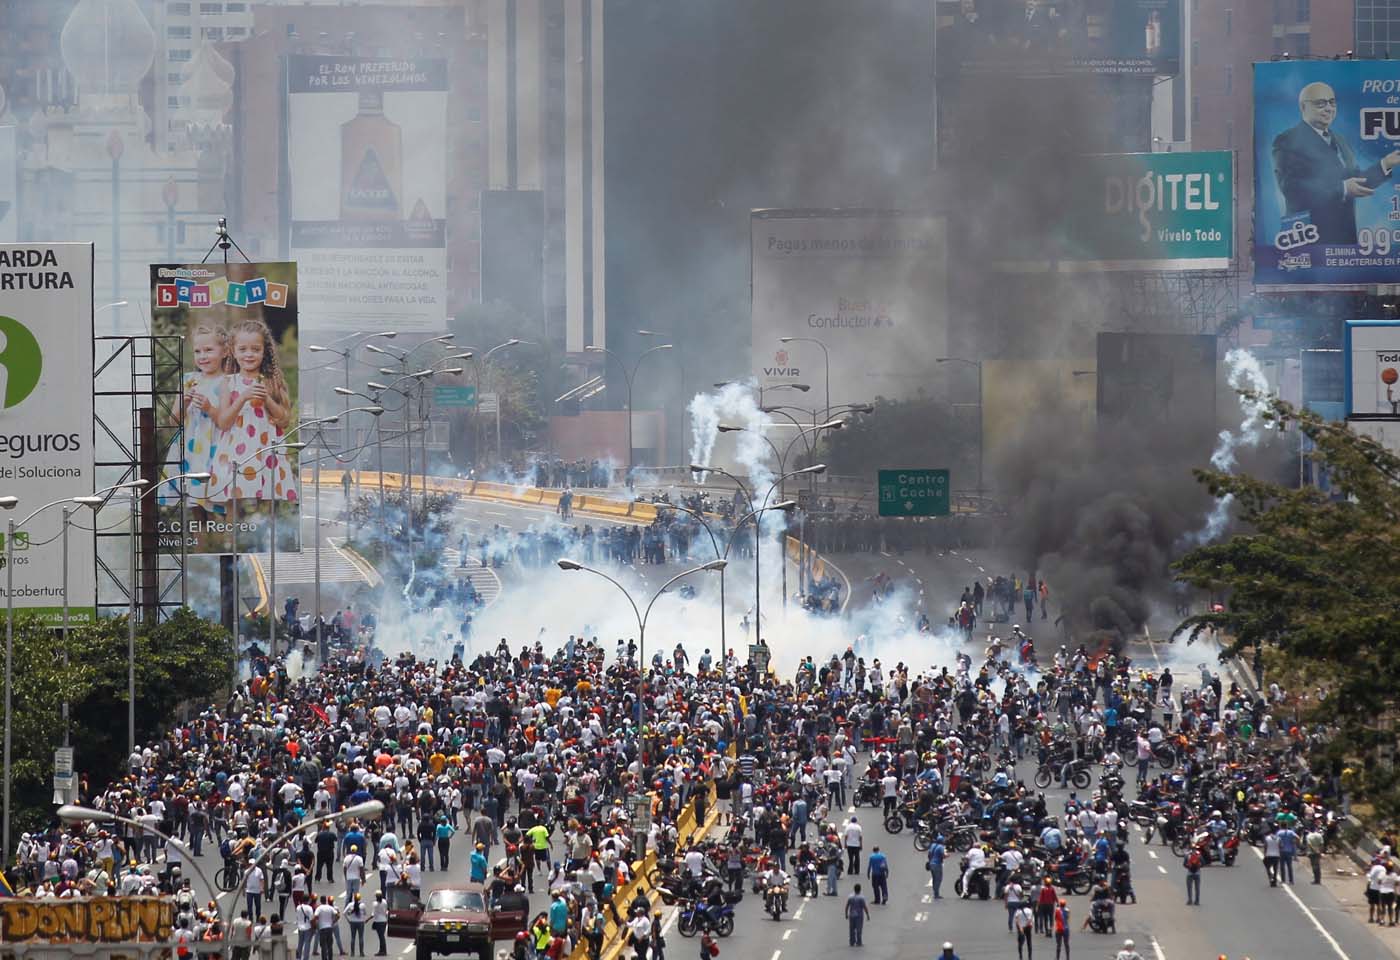 Riot police and demonstrators clash during a rally against Venezuela's President Nicolas Maduro's government in Caracas, Venezuela April 10, 2017. REUTERS/Christian Veron